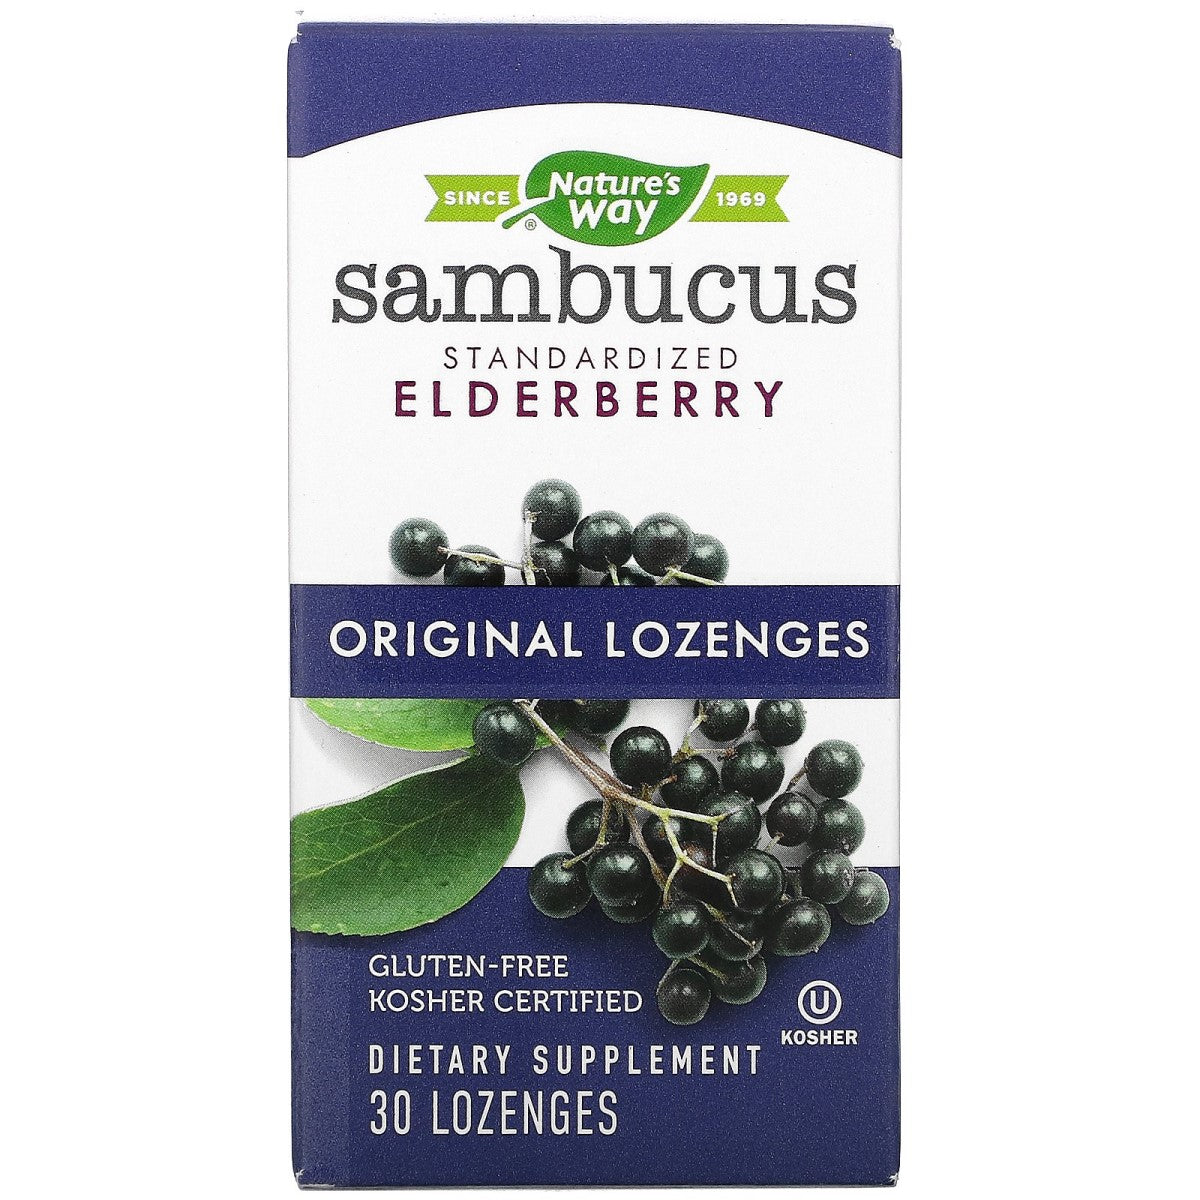 Primary image of Sambucus Original Lozenges